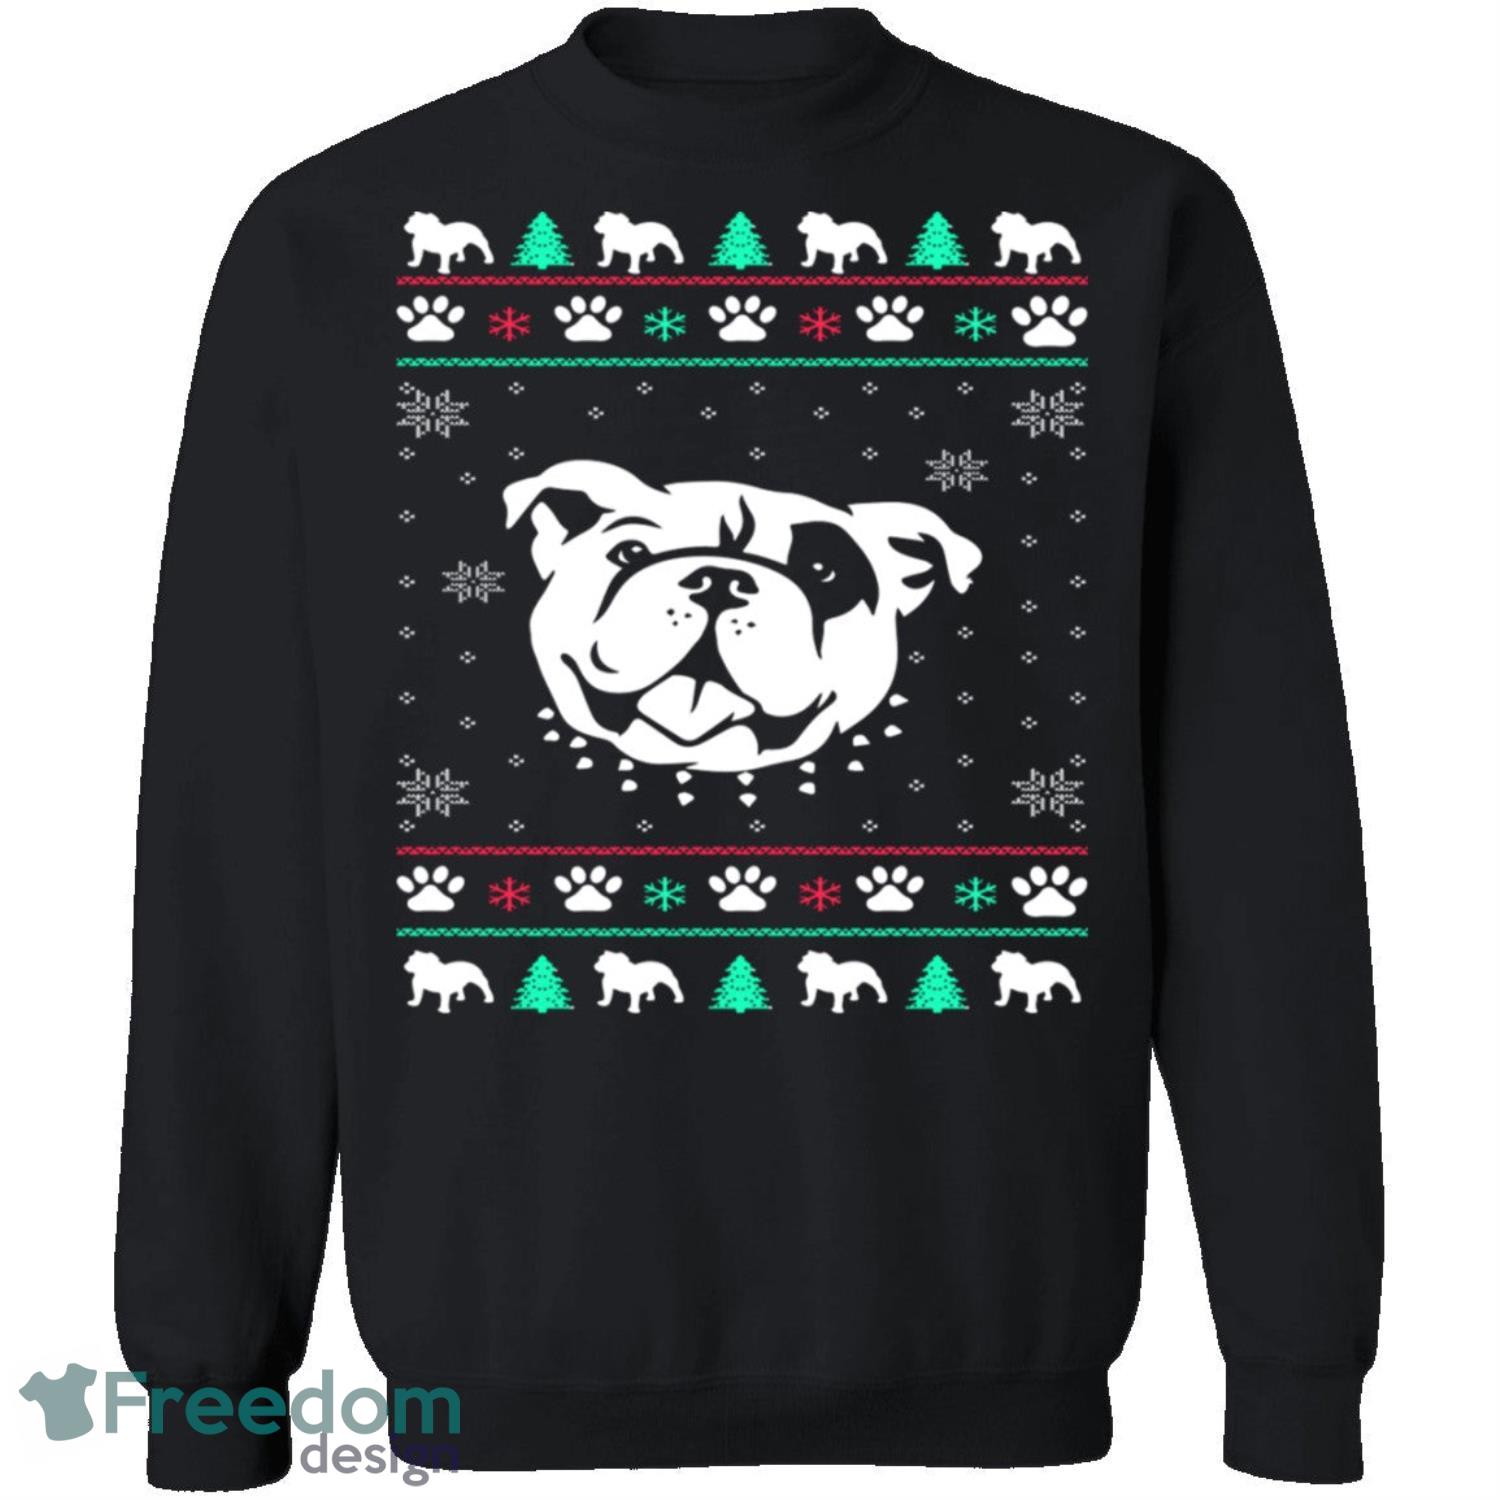 Bulldog Knitting Pattern Ugly Christmas Sweatshirt - bulldog-knitting-pattern-ugly-christmas-sweatshirt-2